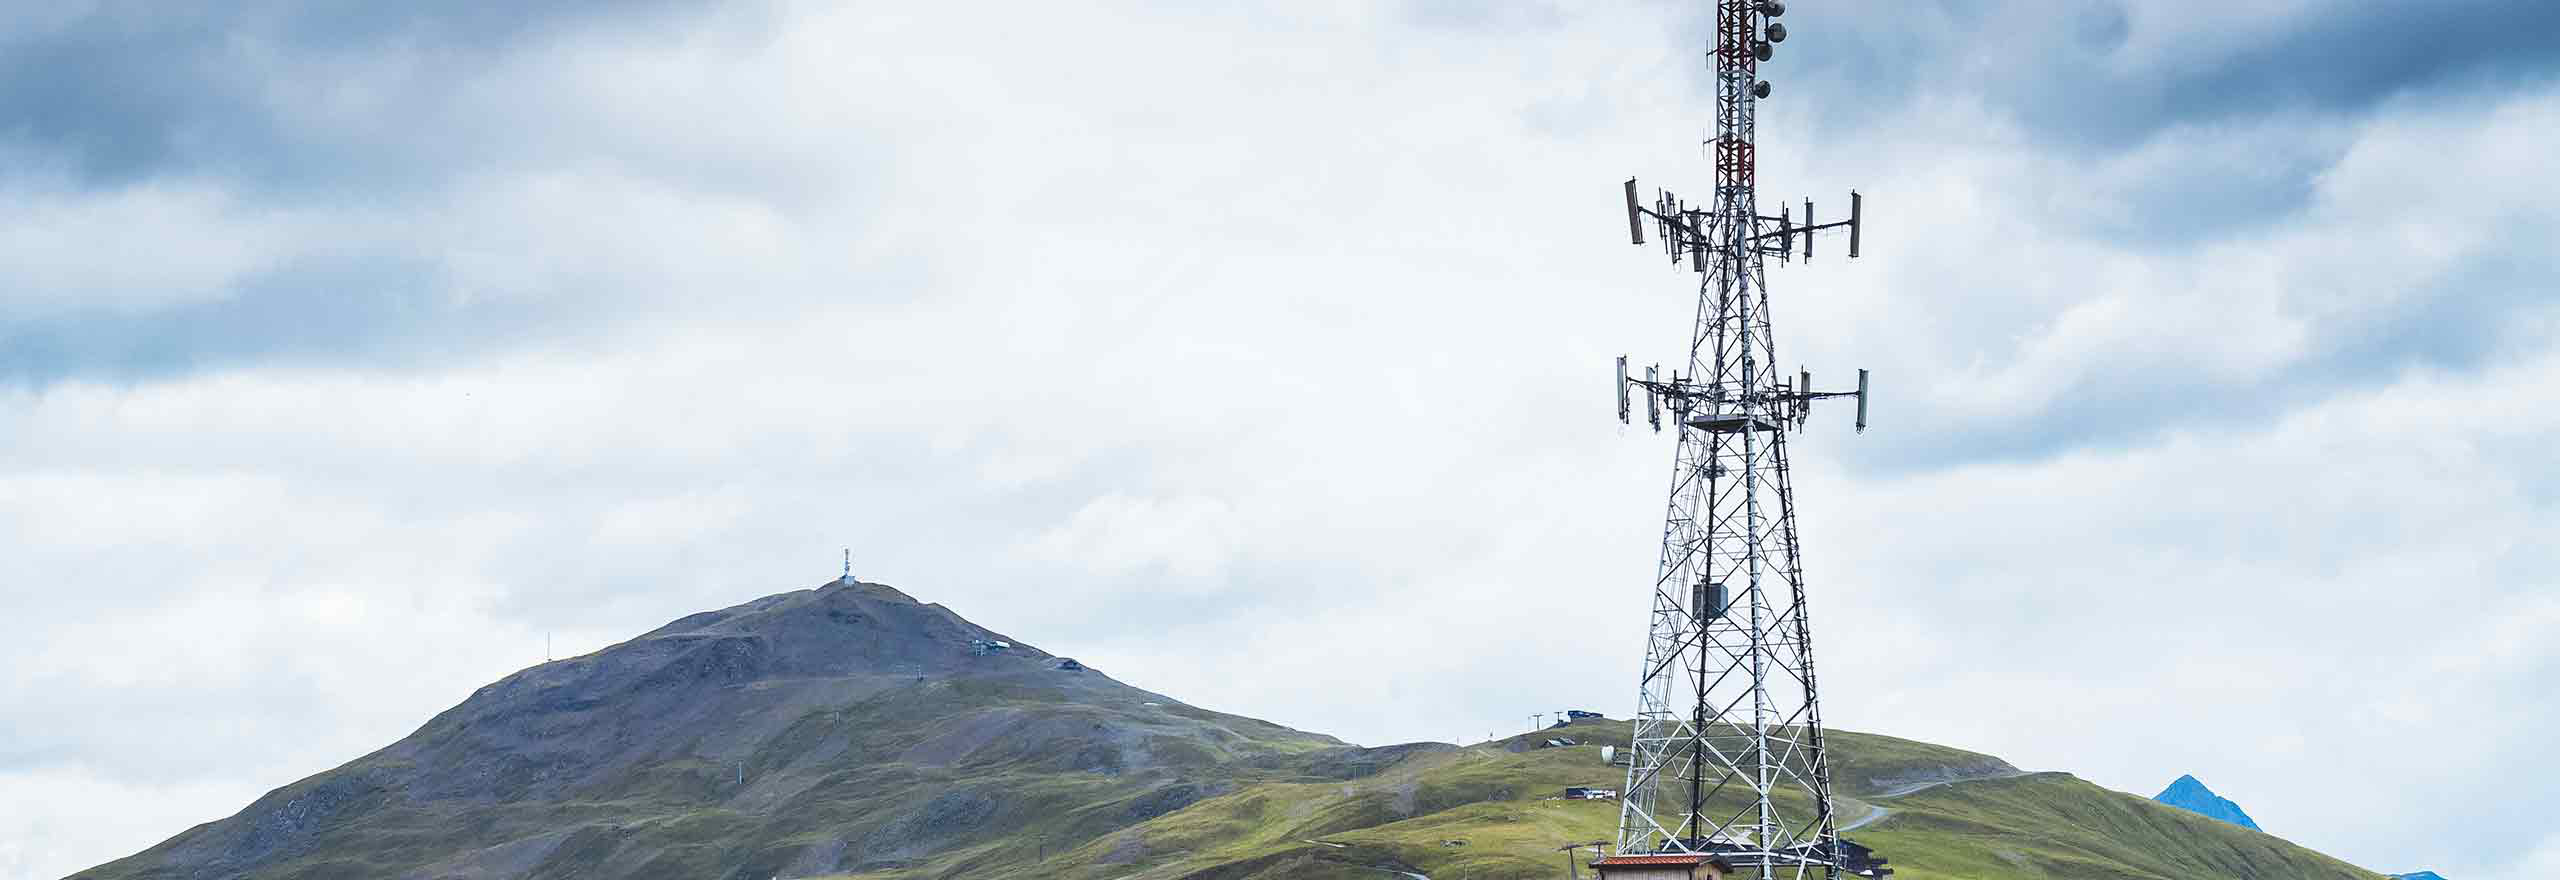 Torre de telecomunicaciones con soluciones GIS